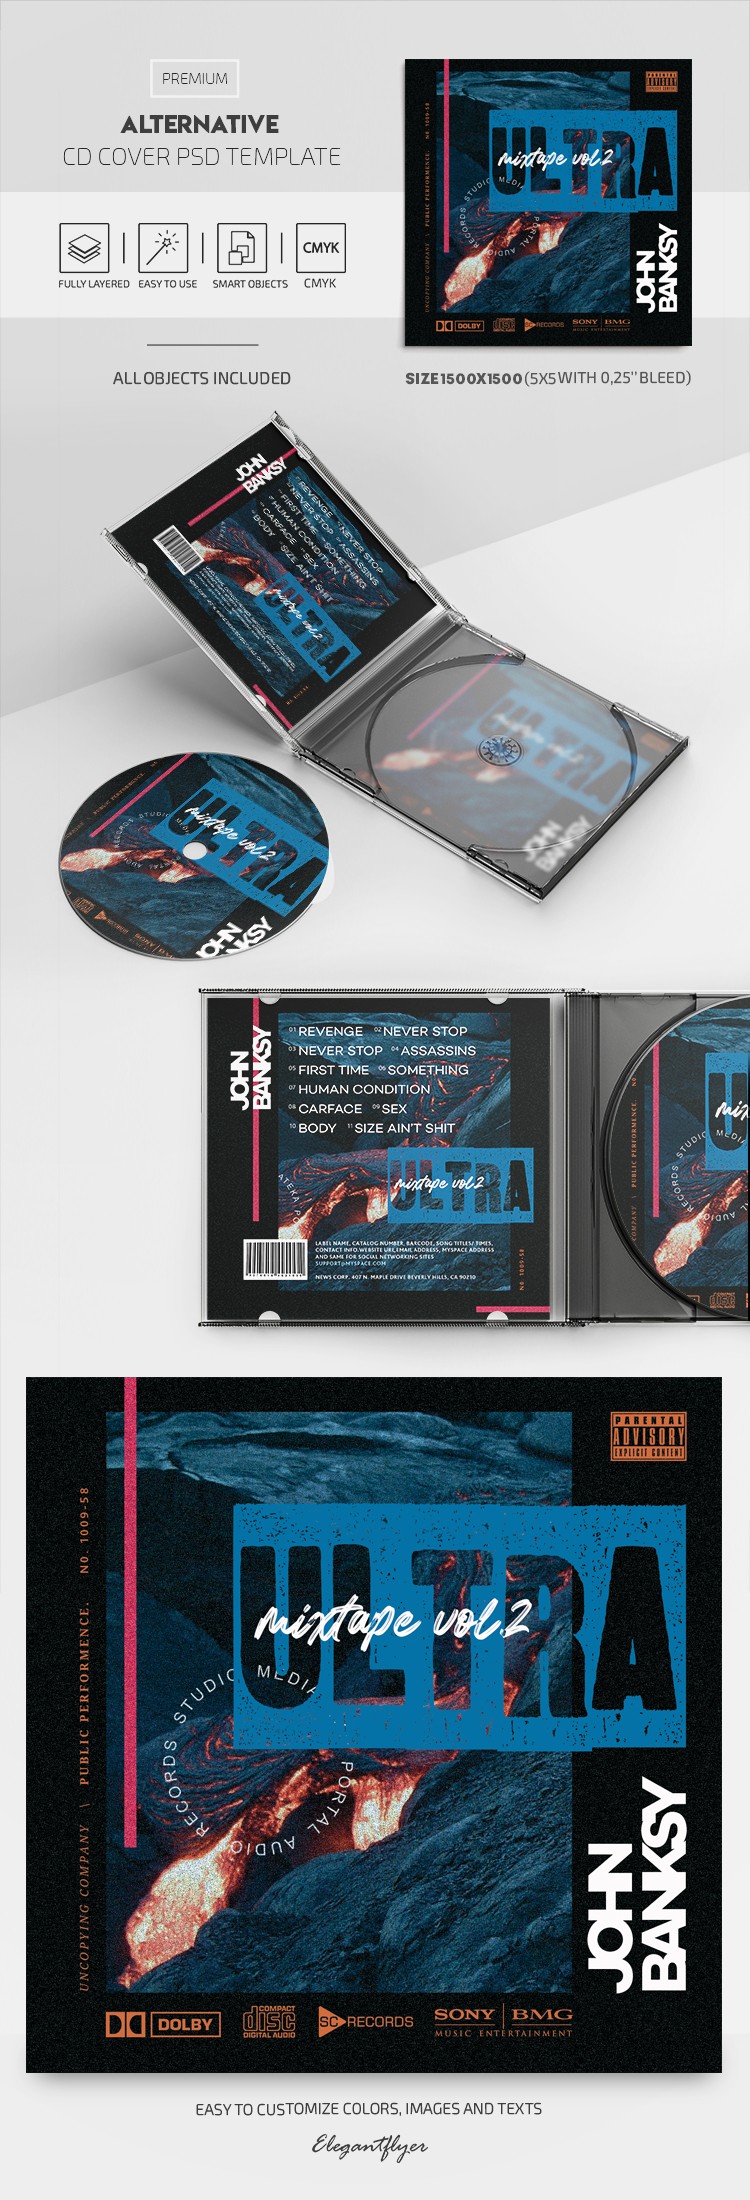 Alternatywna okładka CD. by ElegantFlyer